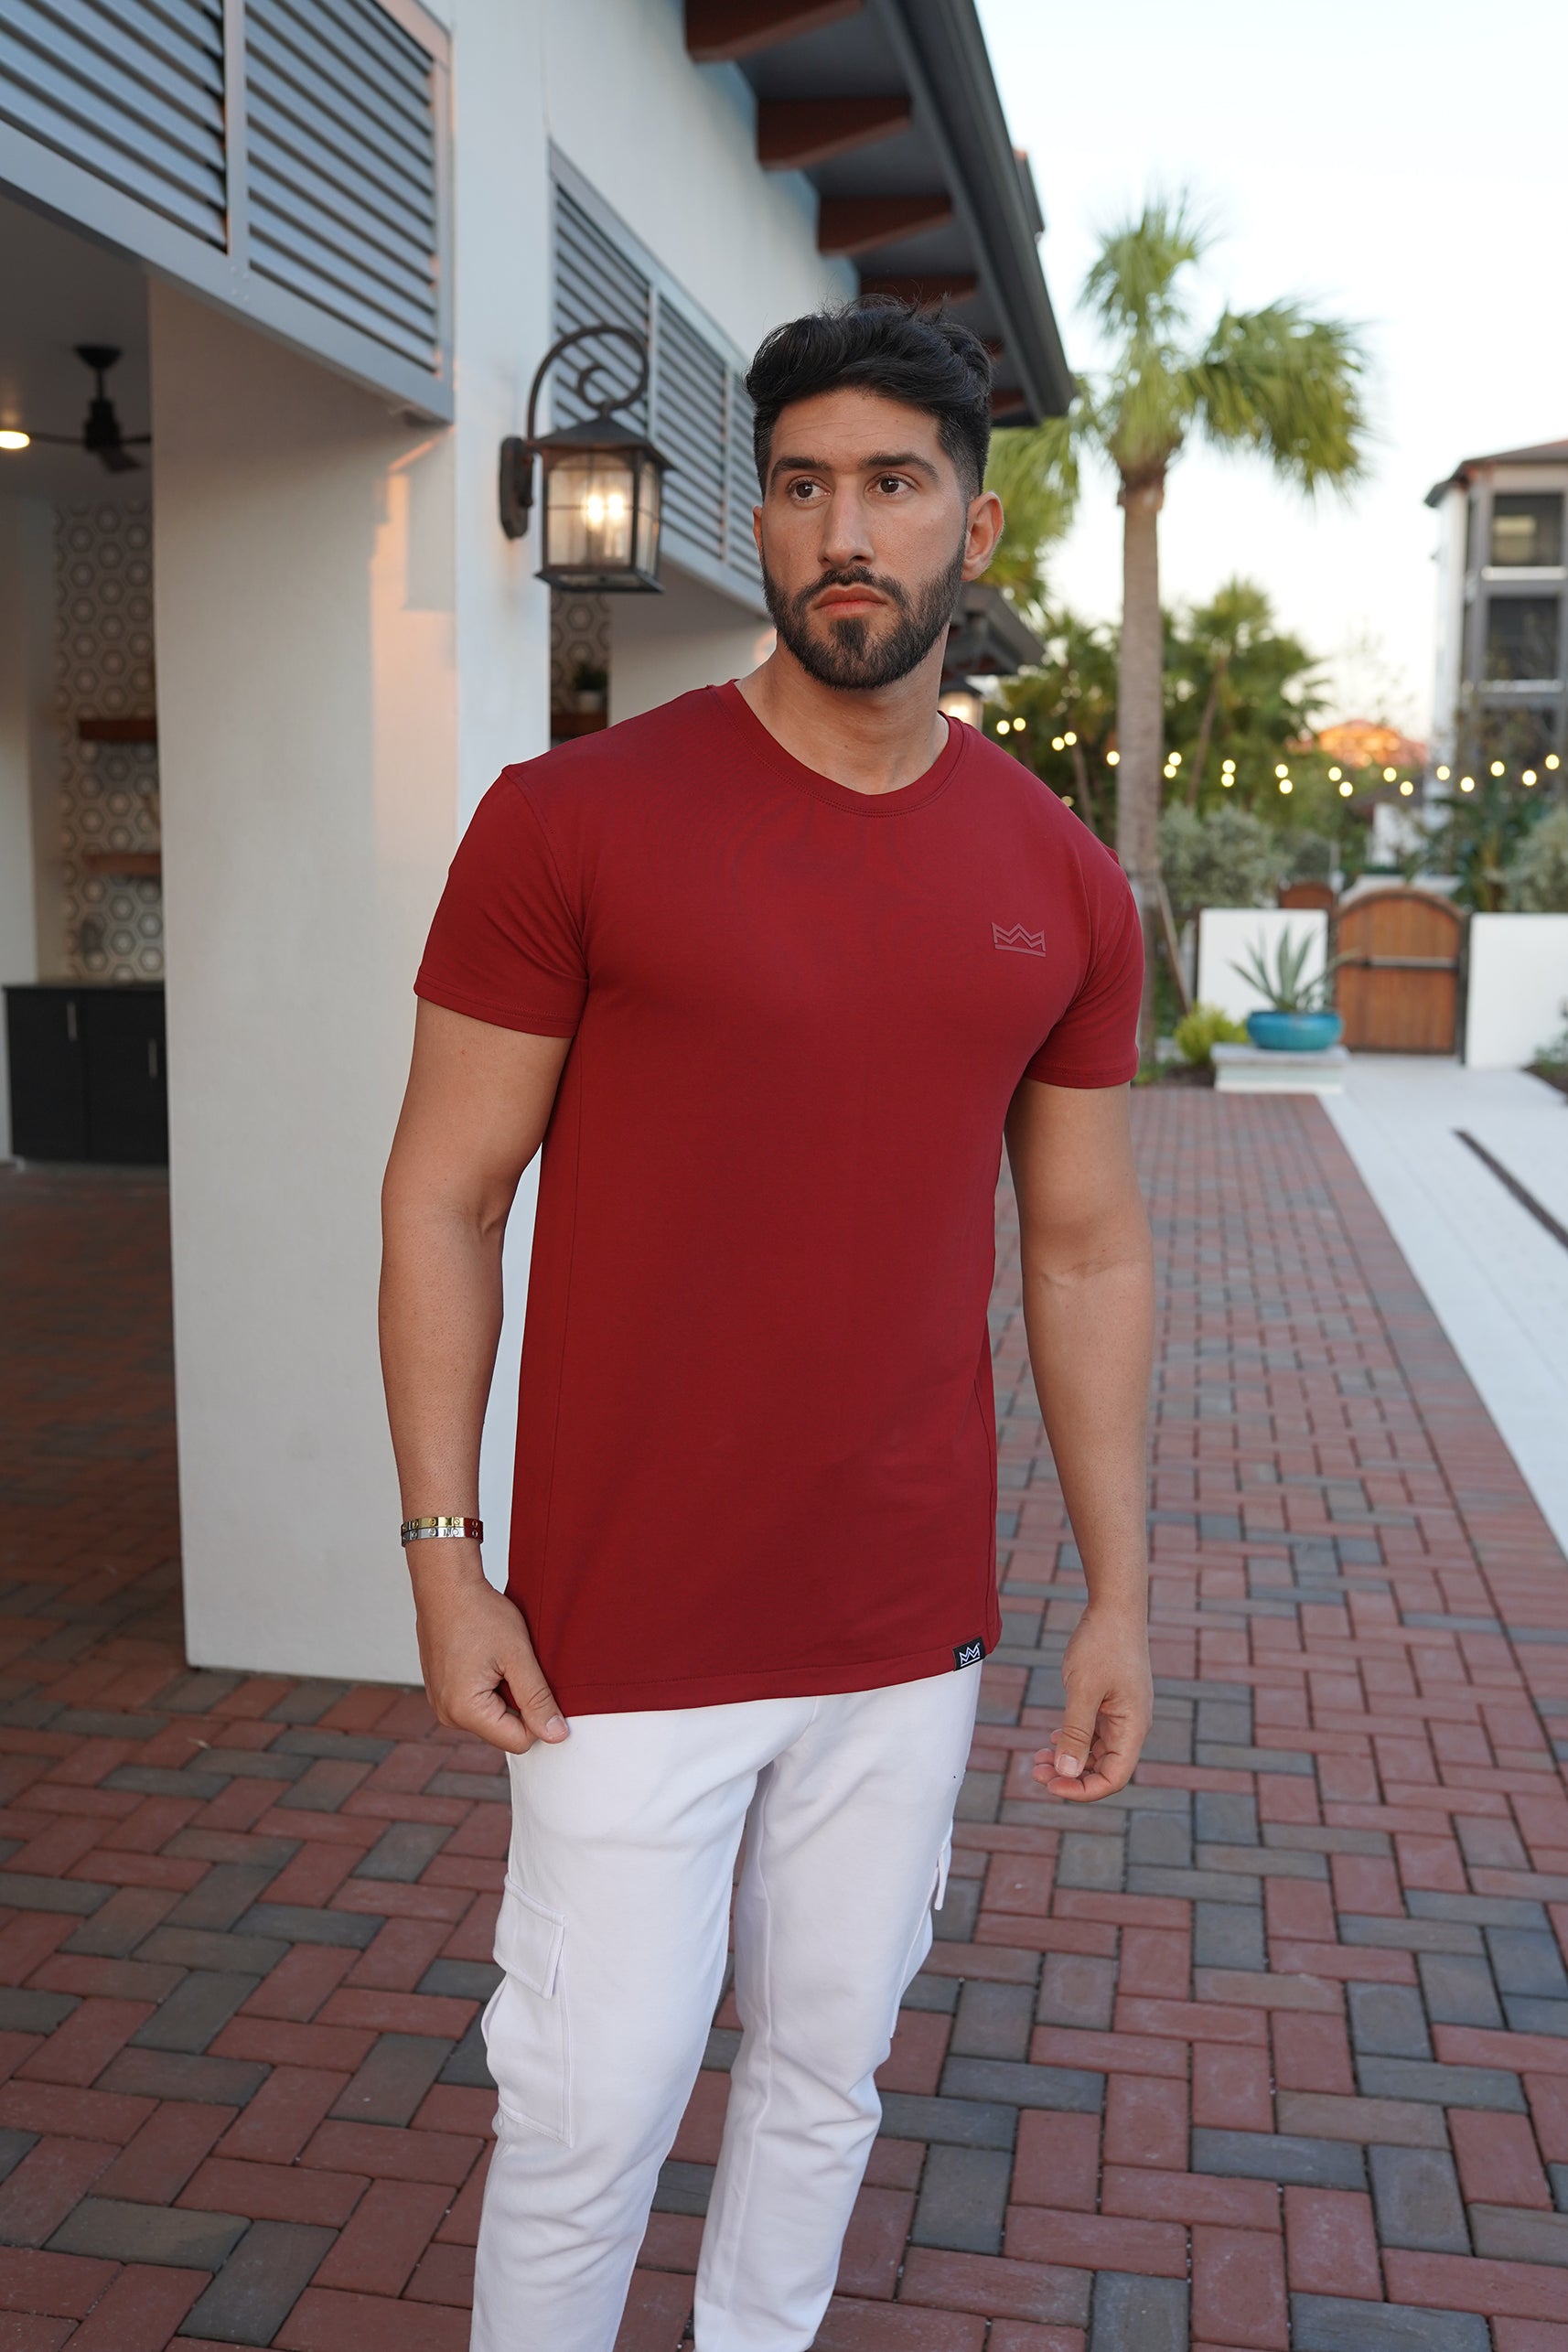 cardinal shirts on sale